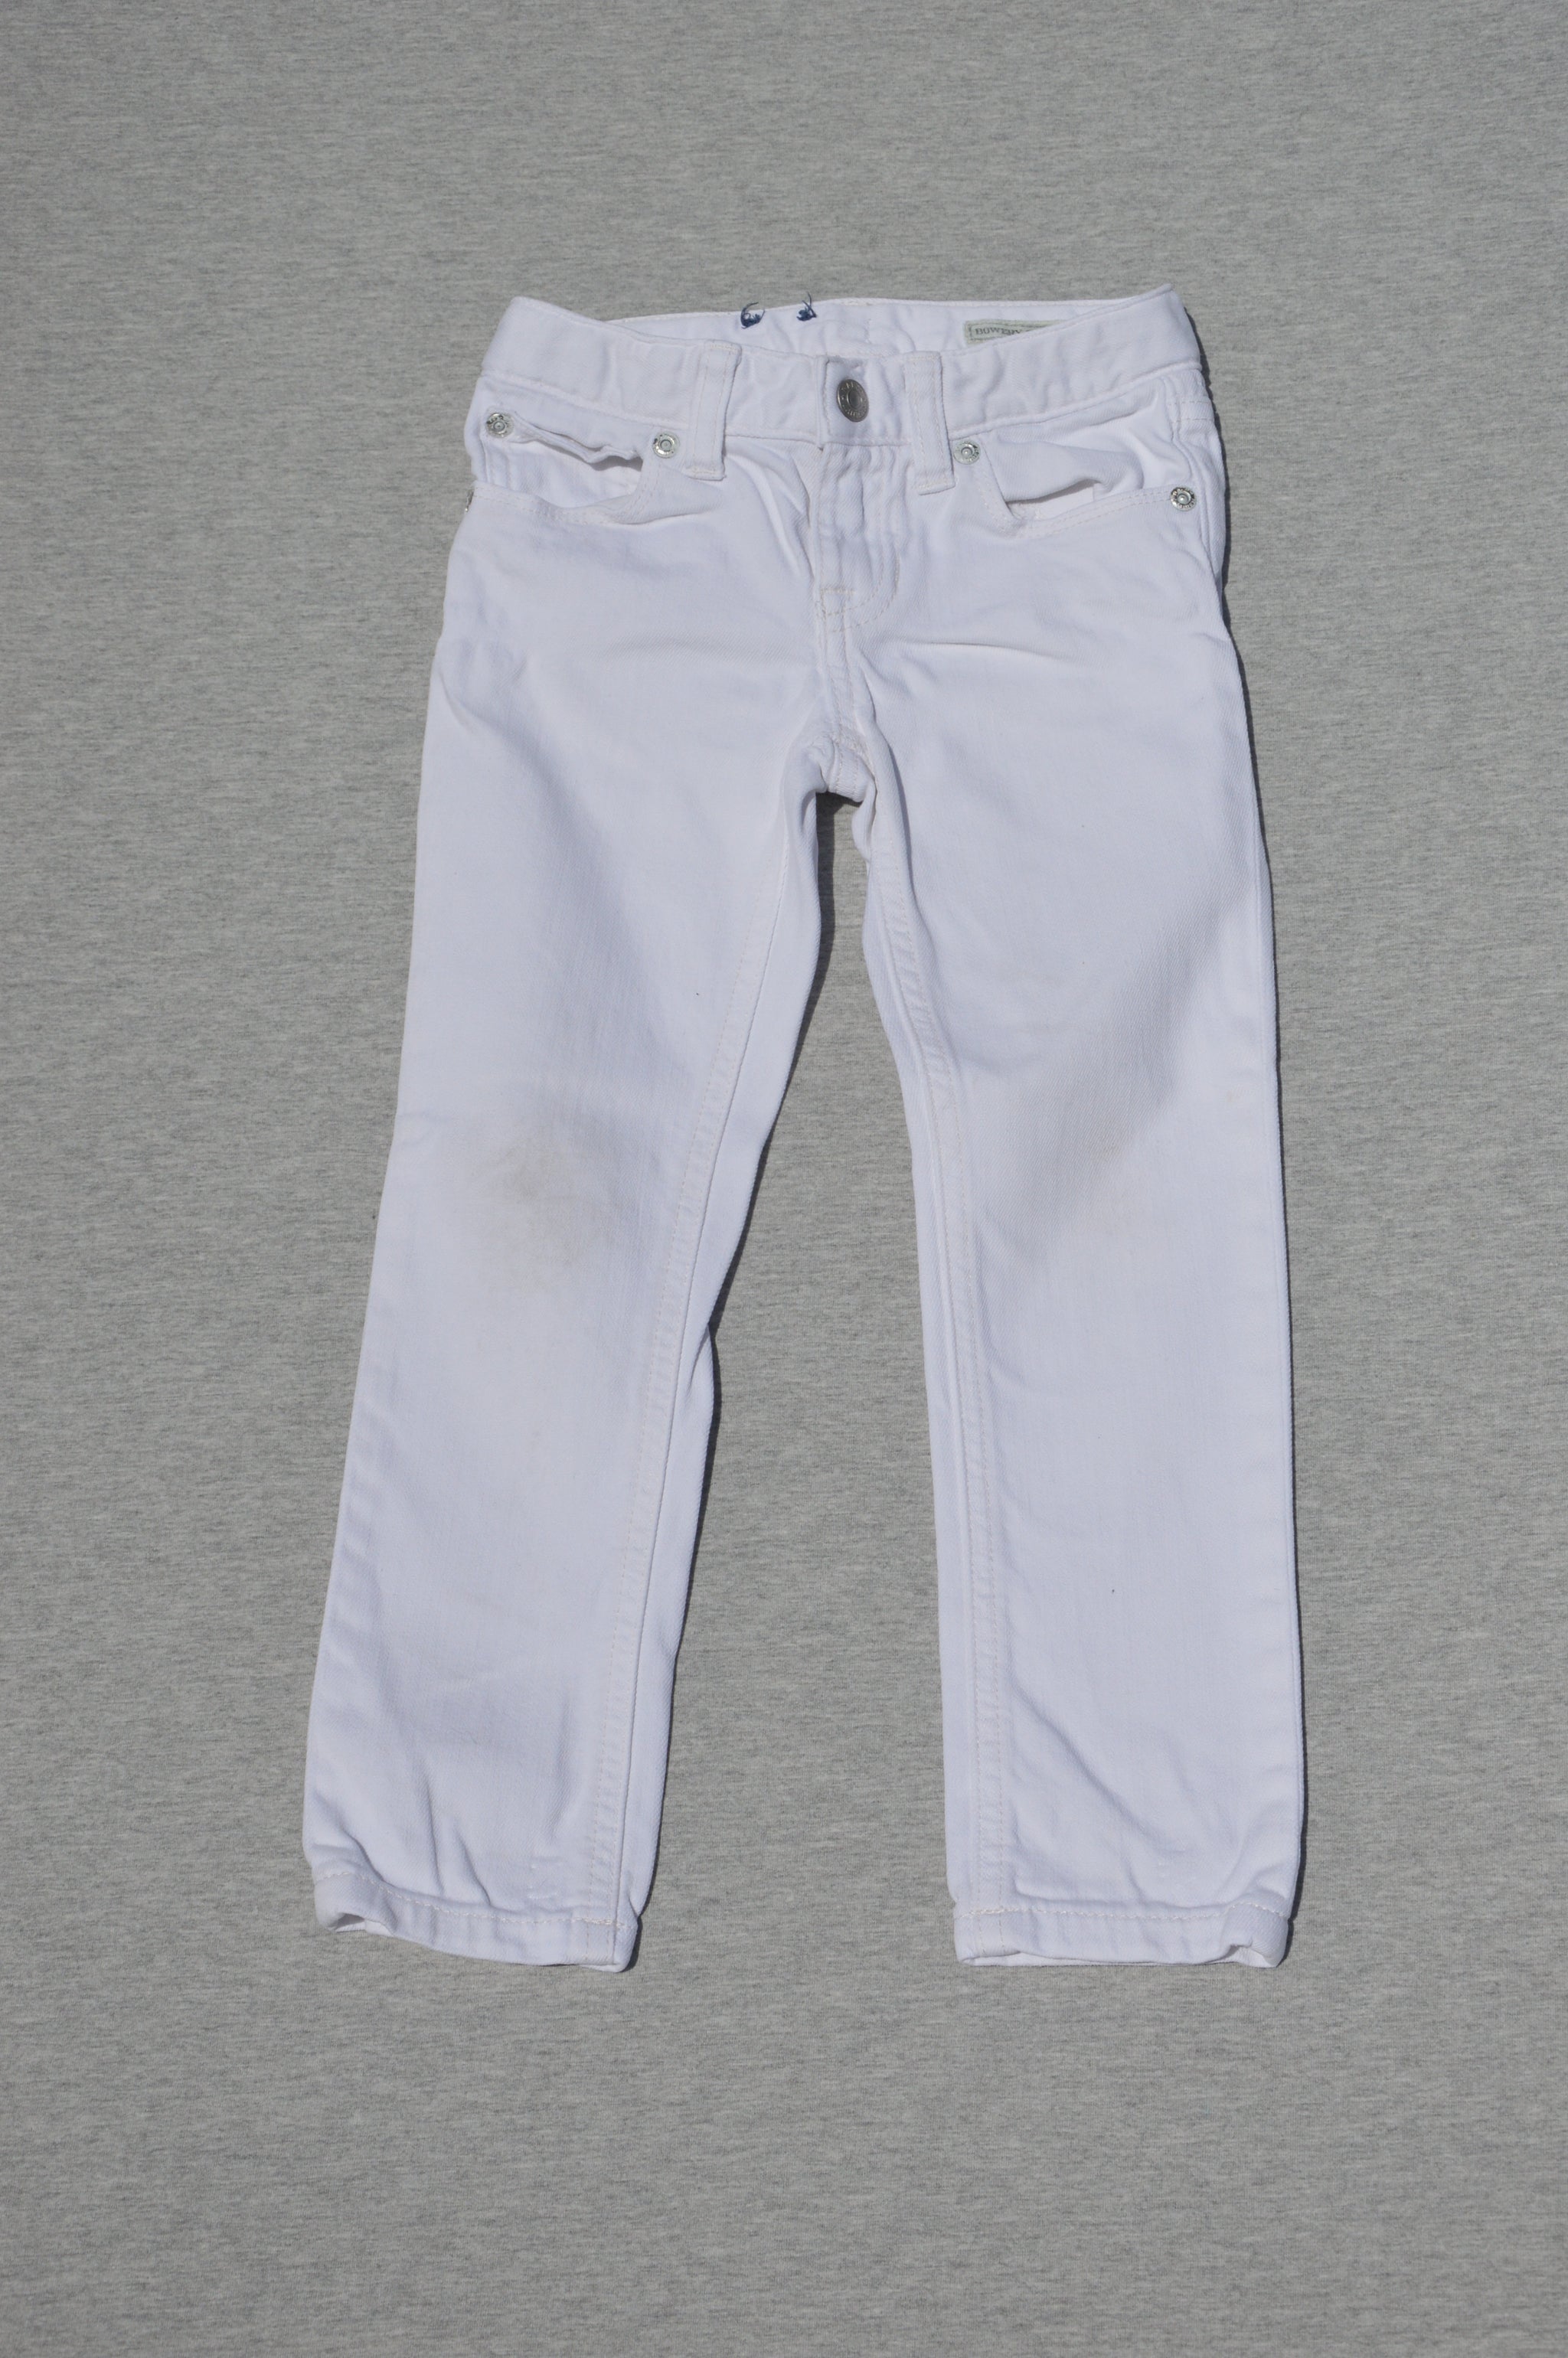 Ralph Lauren 'Bowery Skinny' white jeans, size 3-4 - Charlie & Flo's